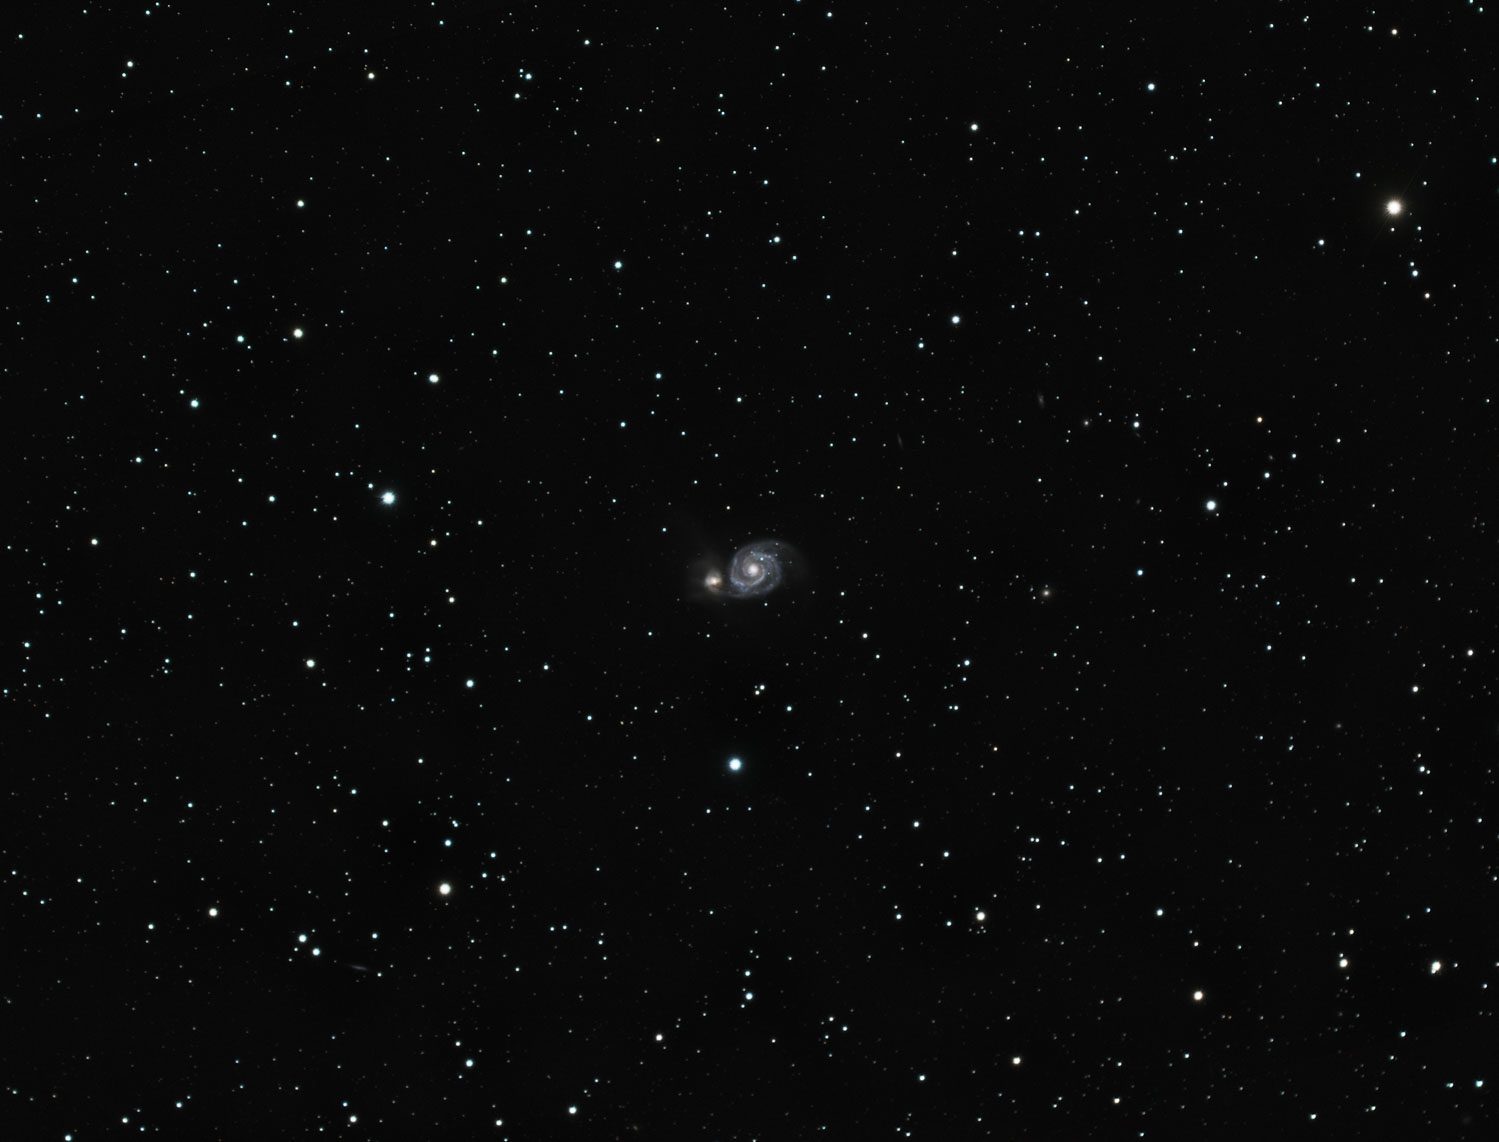 20200413-20200417 Messier 51, or Whirlpool Galaxy